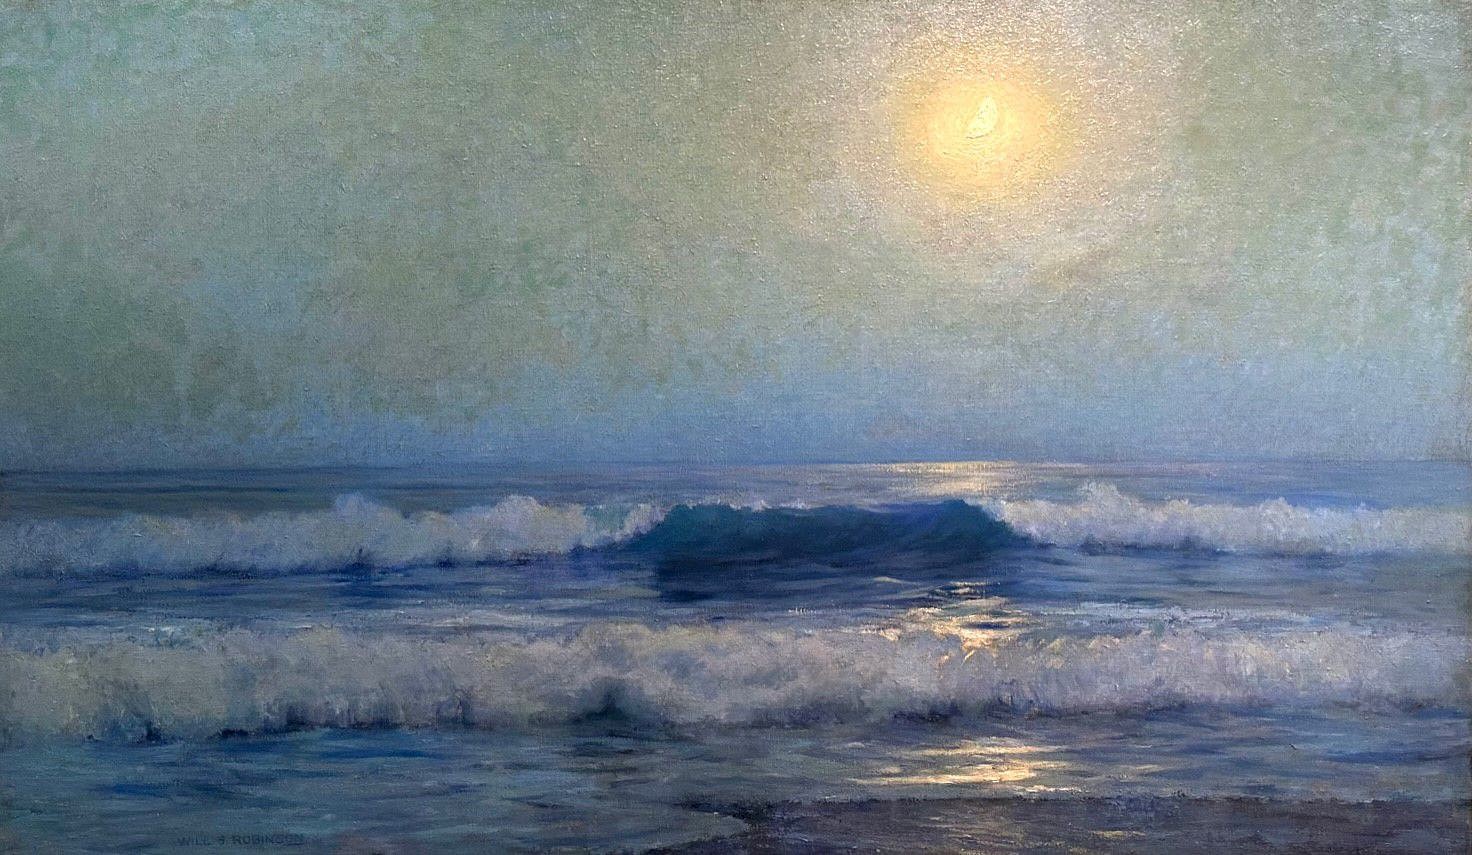 William S. Robinson, Evening
oil on canvas, 30"" x 50""
TH 1119
$17,500